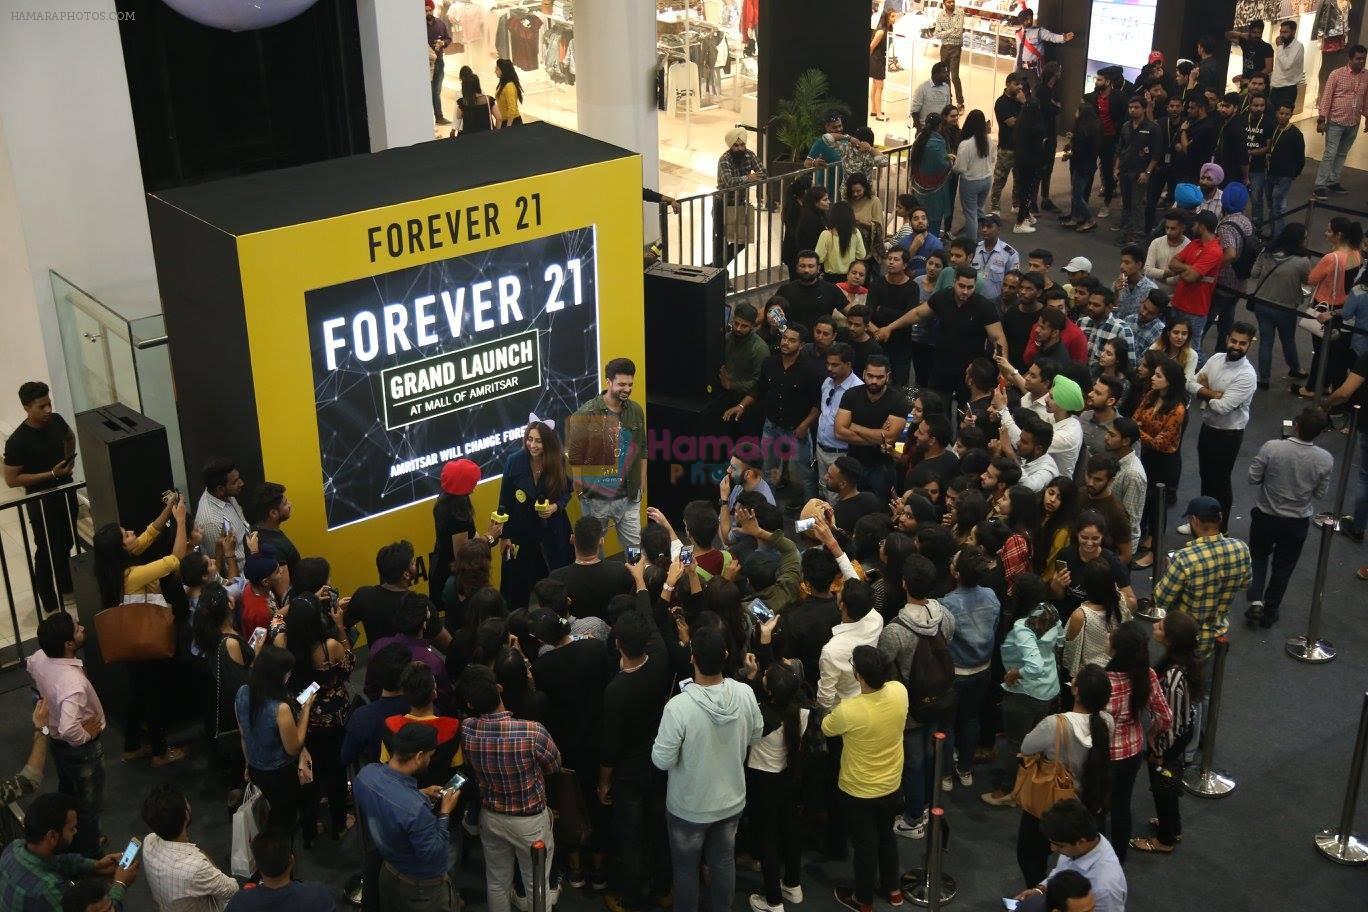 Karan Kundra and Anusha Dandekar launched Forever 21 store in Amritsar on 9th Nov 2017